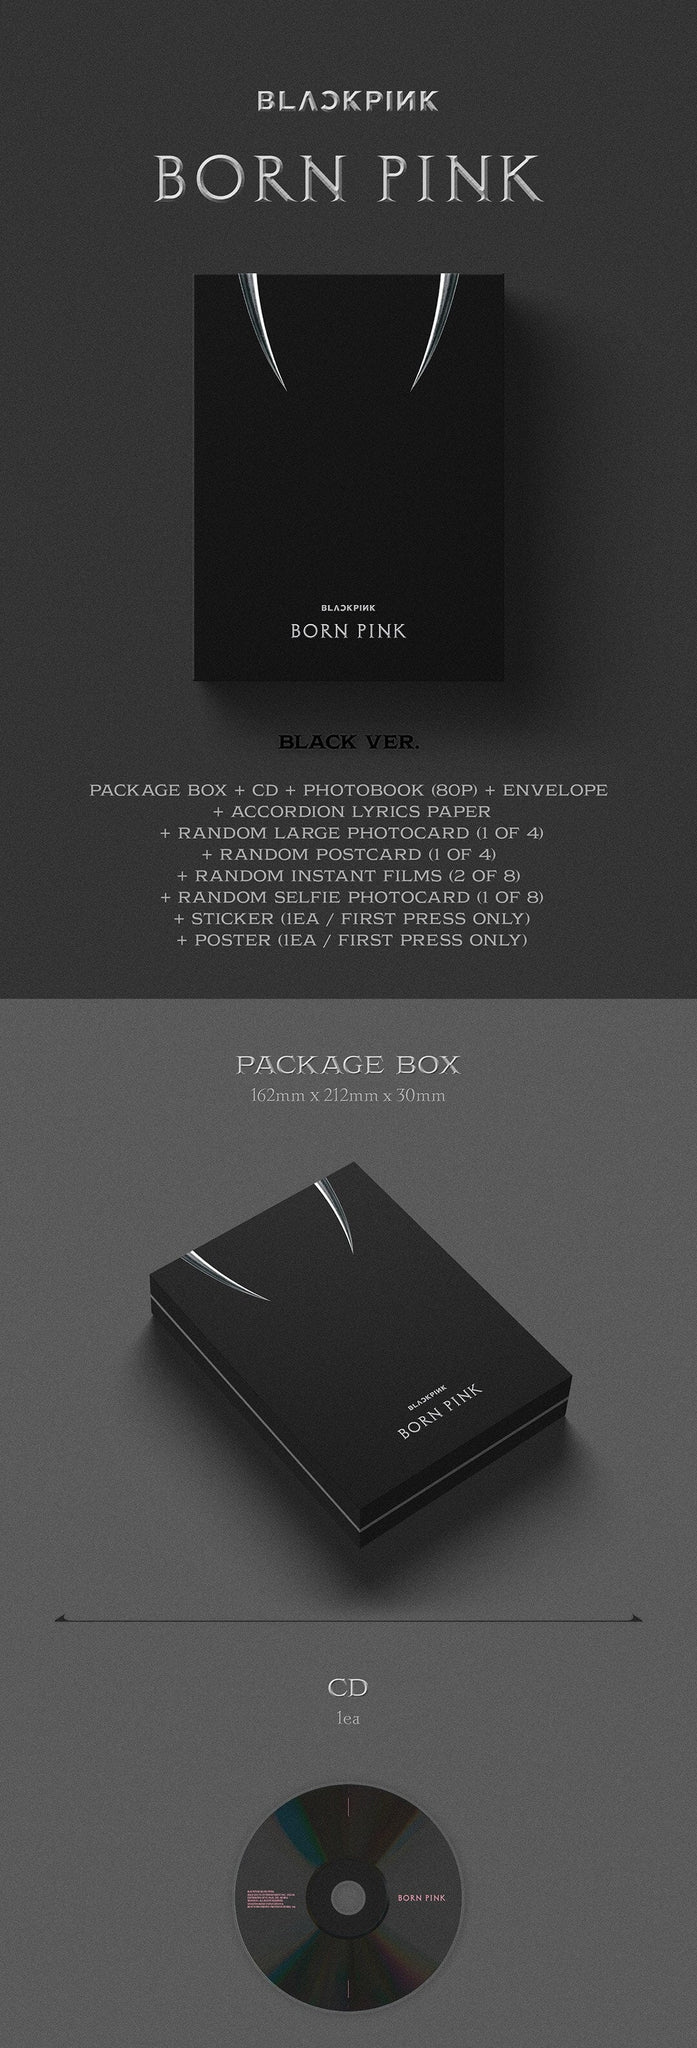 BLACKPINK BORN PINK BOX SET BLACK Version Album Info Inclusions Package Box CD